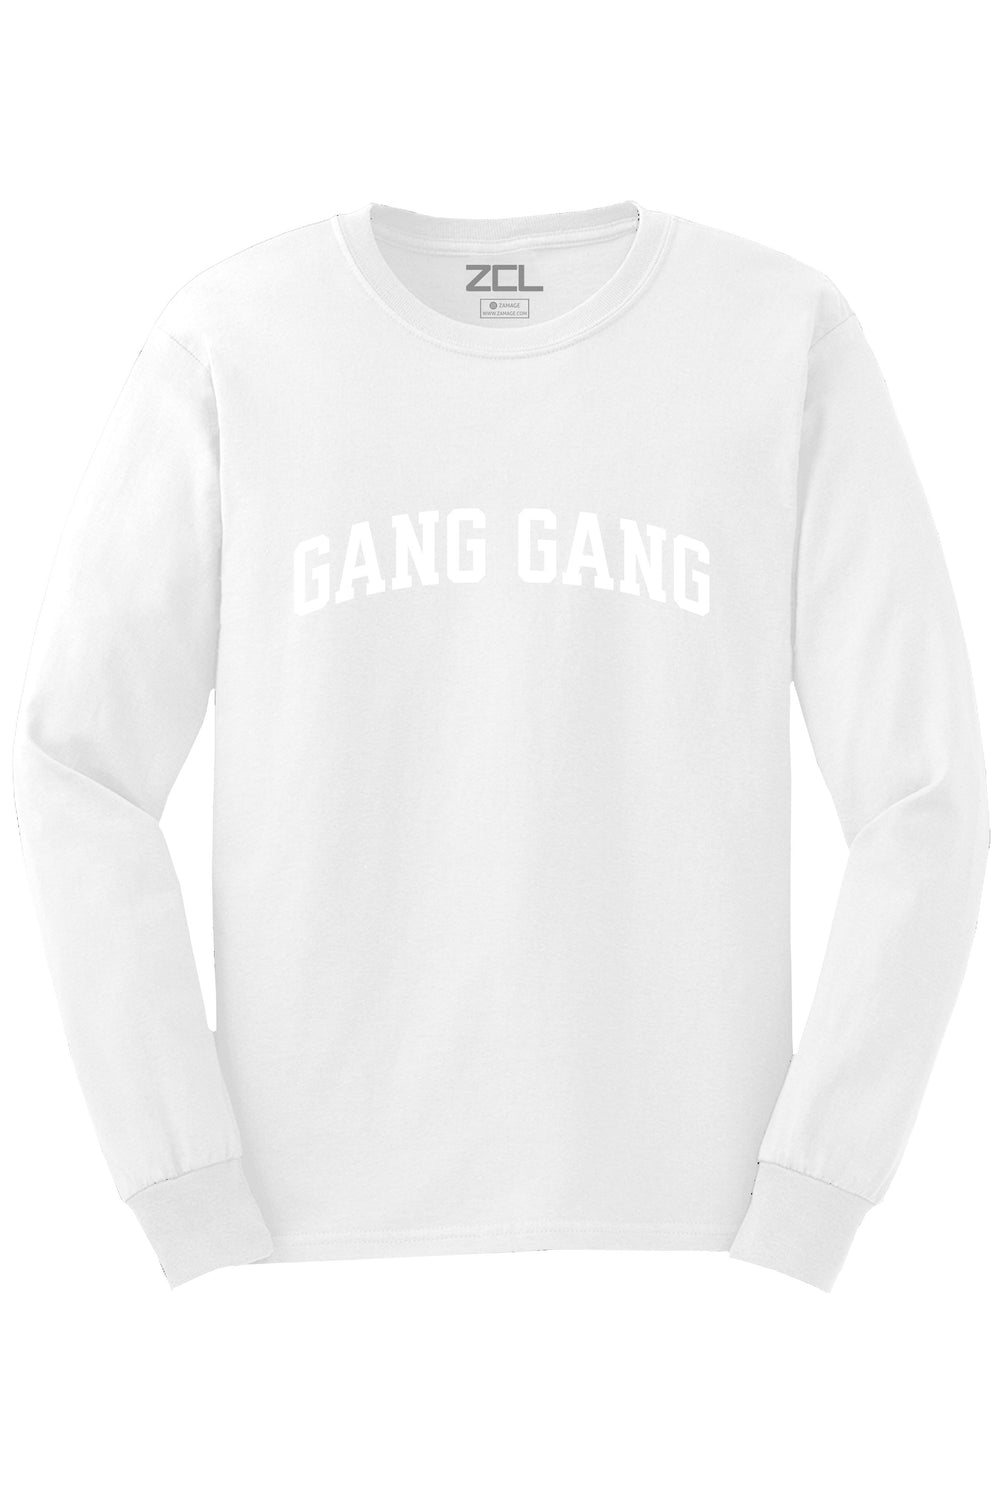 Gang Gang Long Sleeve Tee (White Logo) - Zamage